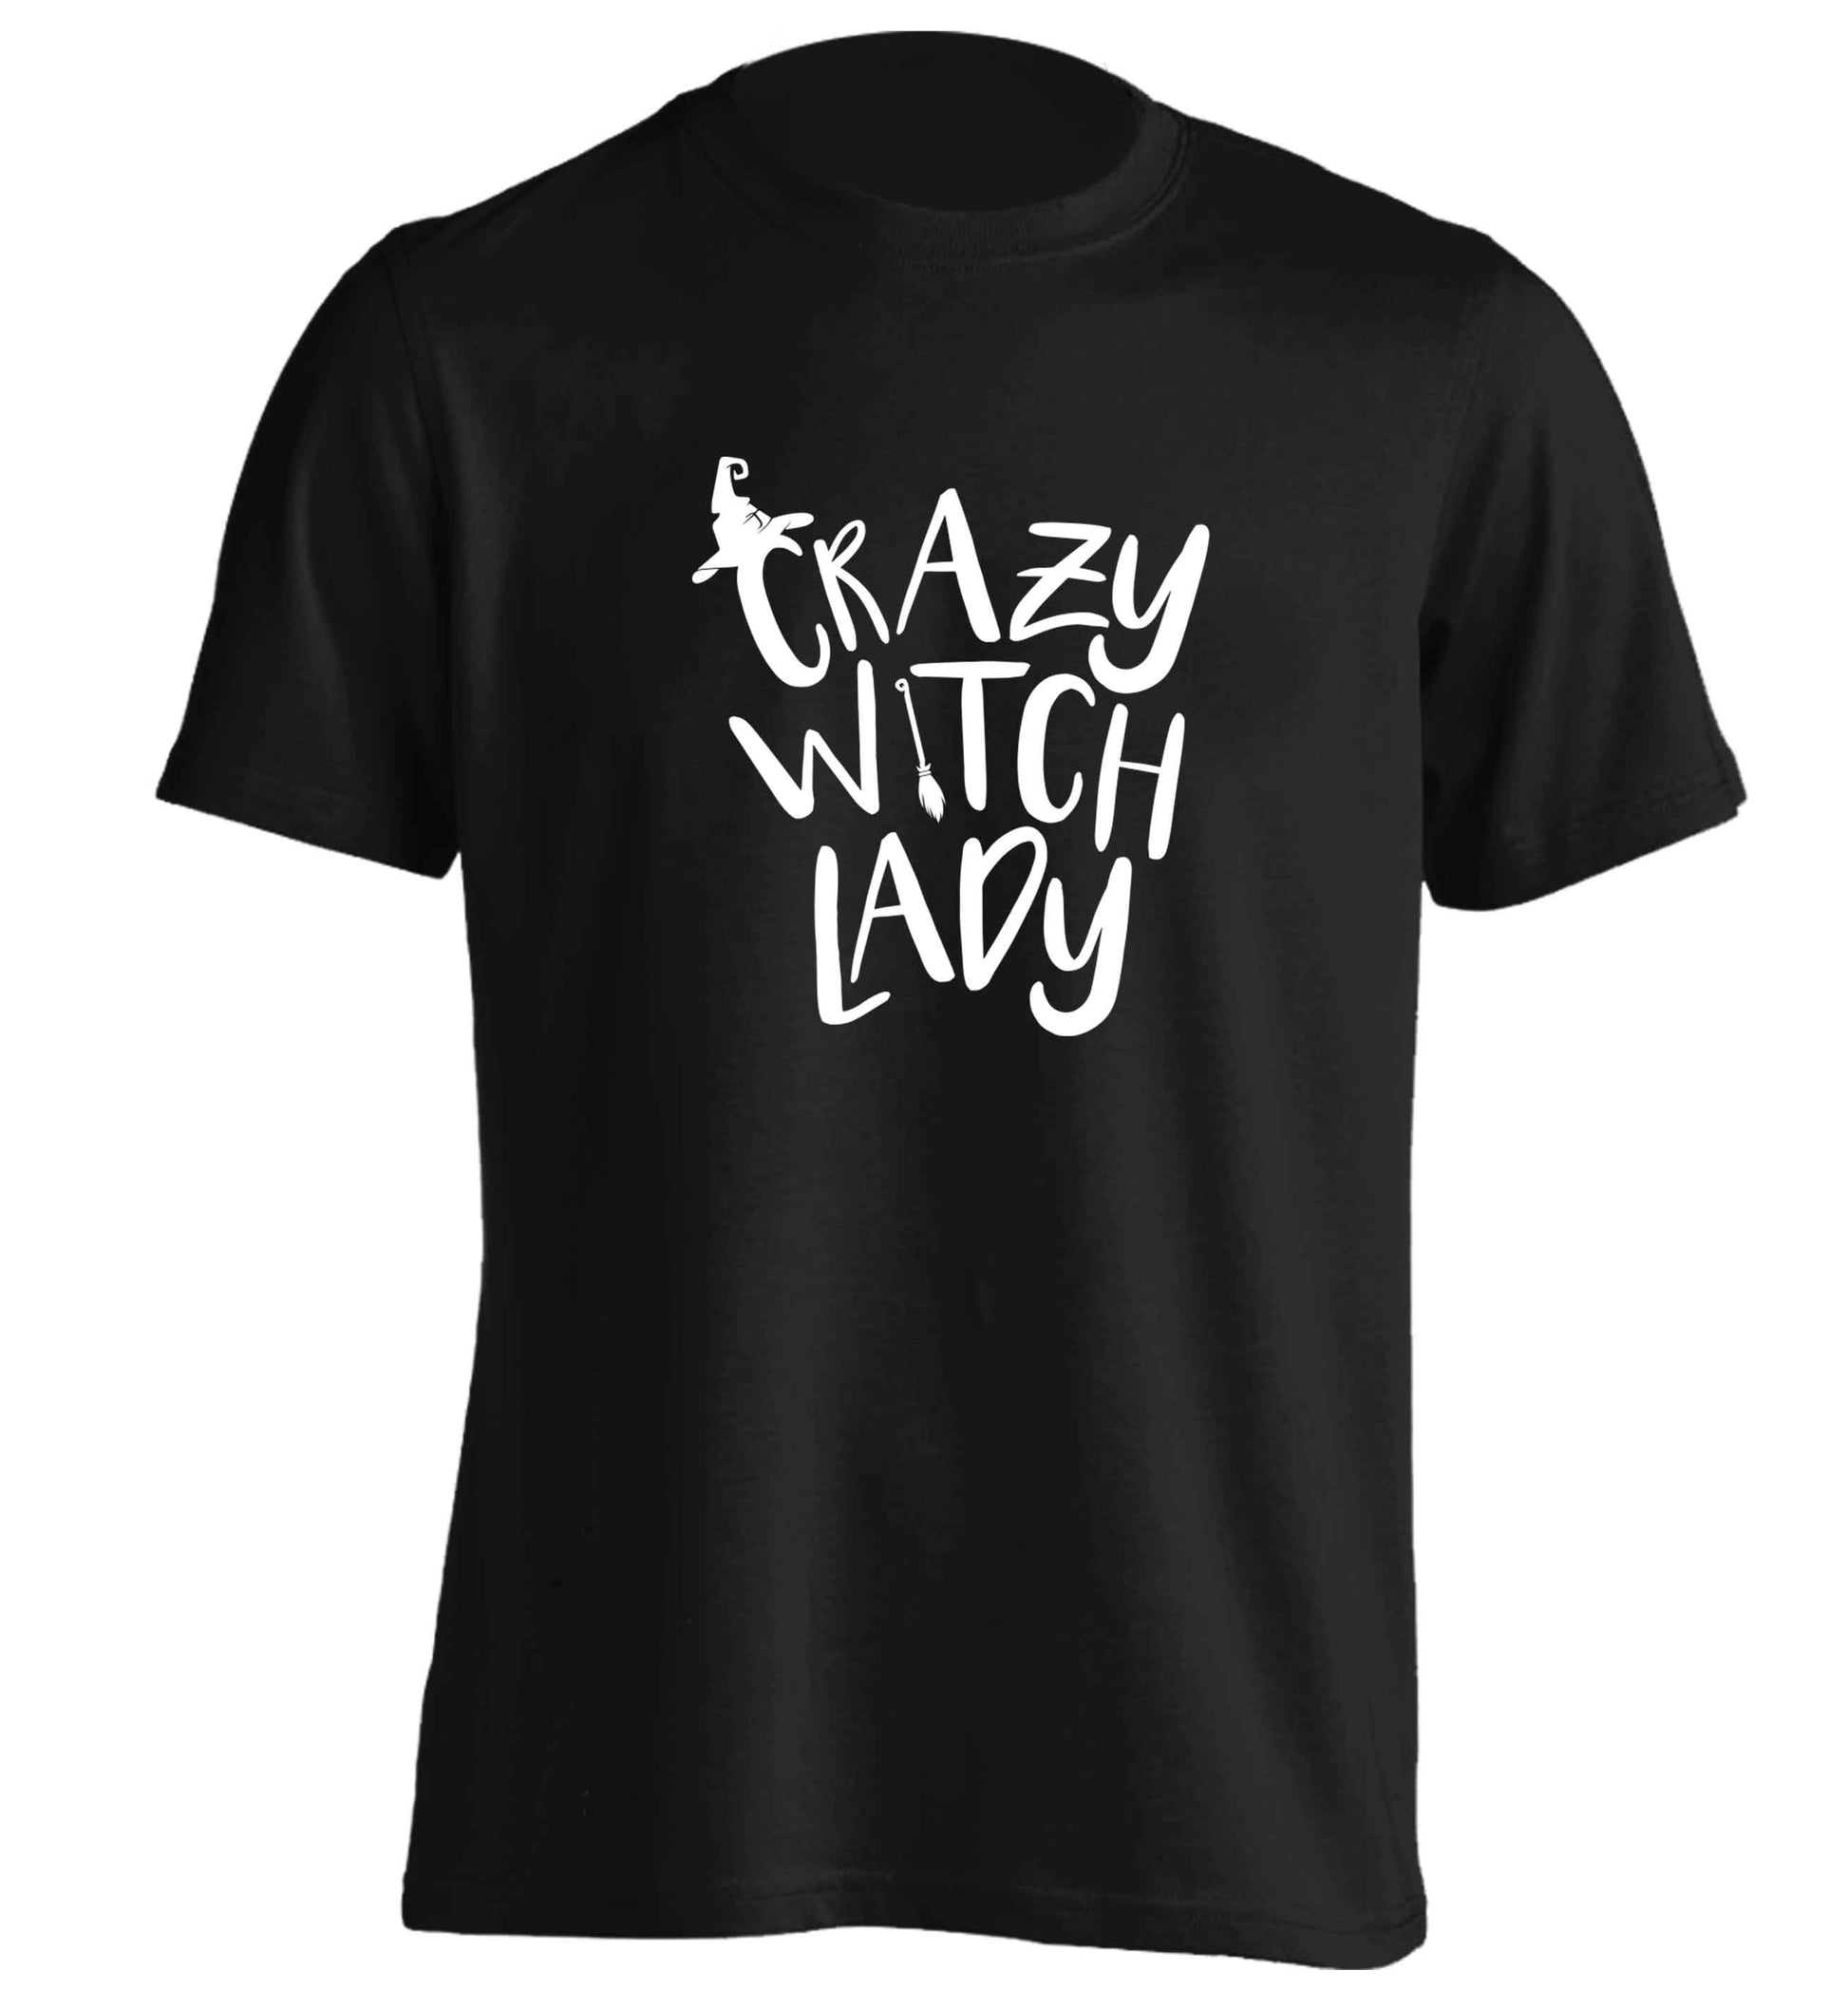 Crazy witch lady adults unisex black Tshirt 2XL